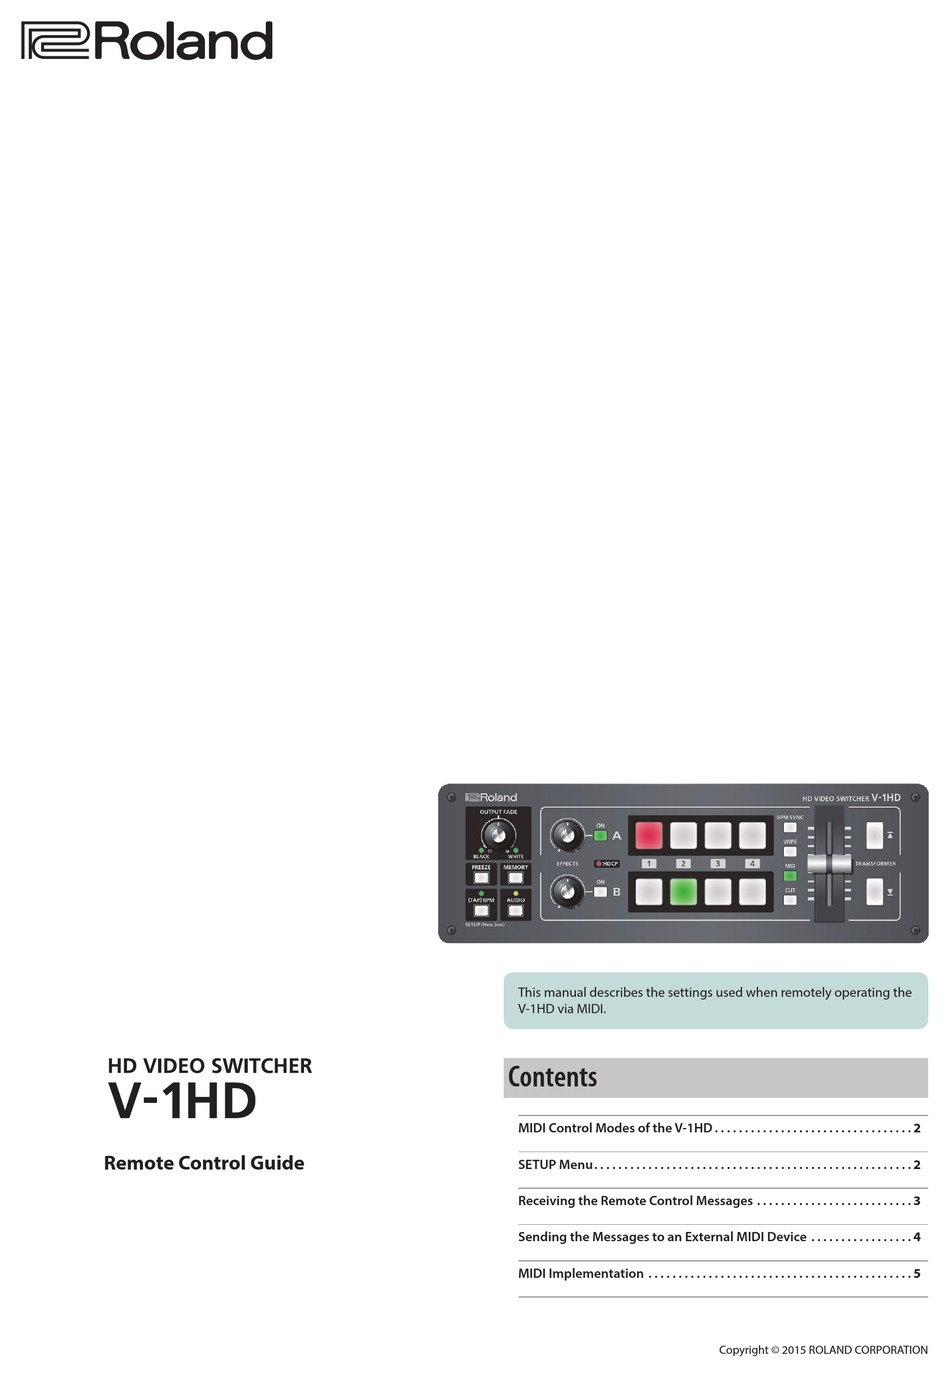 ROLAND V-1HD MANUAL Pdf Download | ManualsLib